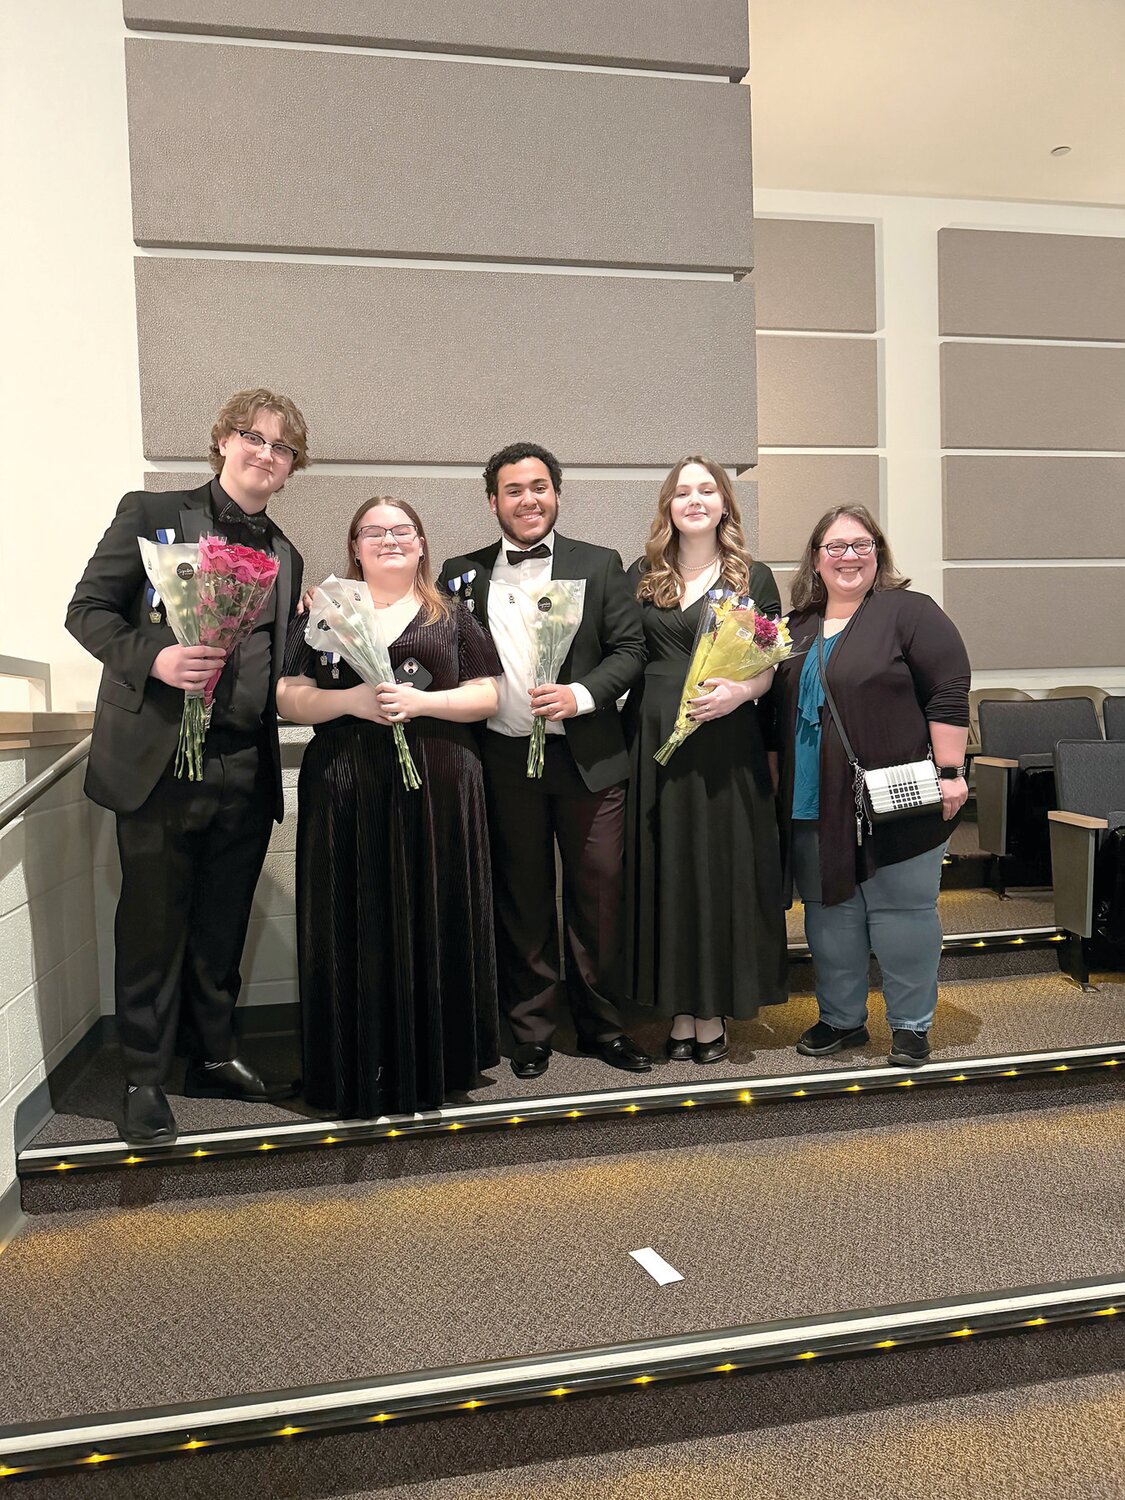 From left are: Ethan Hinshaw, Samantha Bajek, Emiliano Quinones,  Margaret MacAdams and Bensalem High School Choral Director Raegan Ruiz.